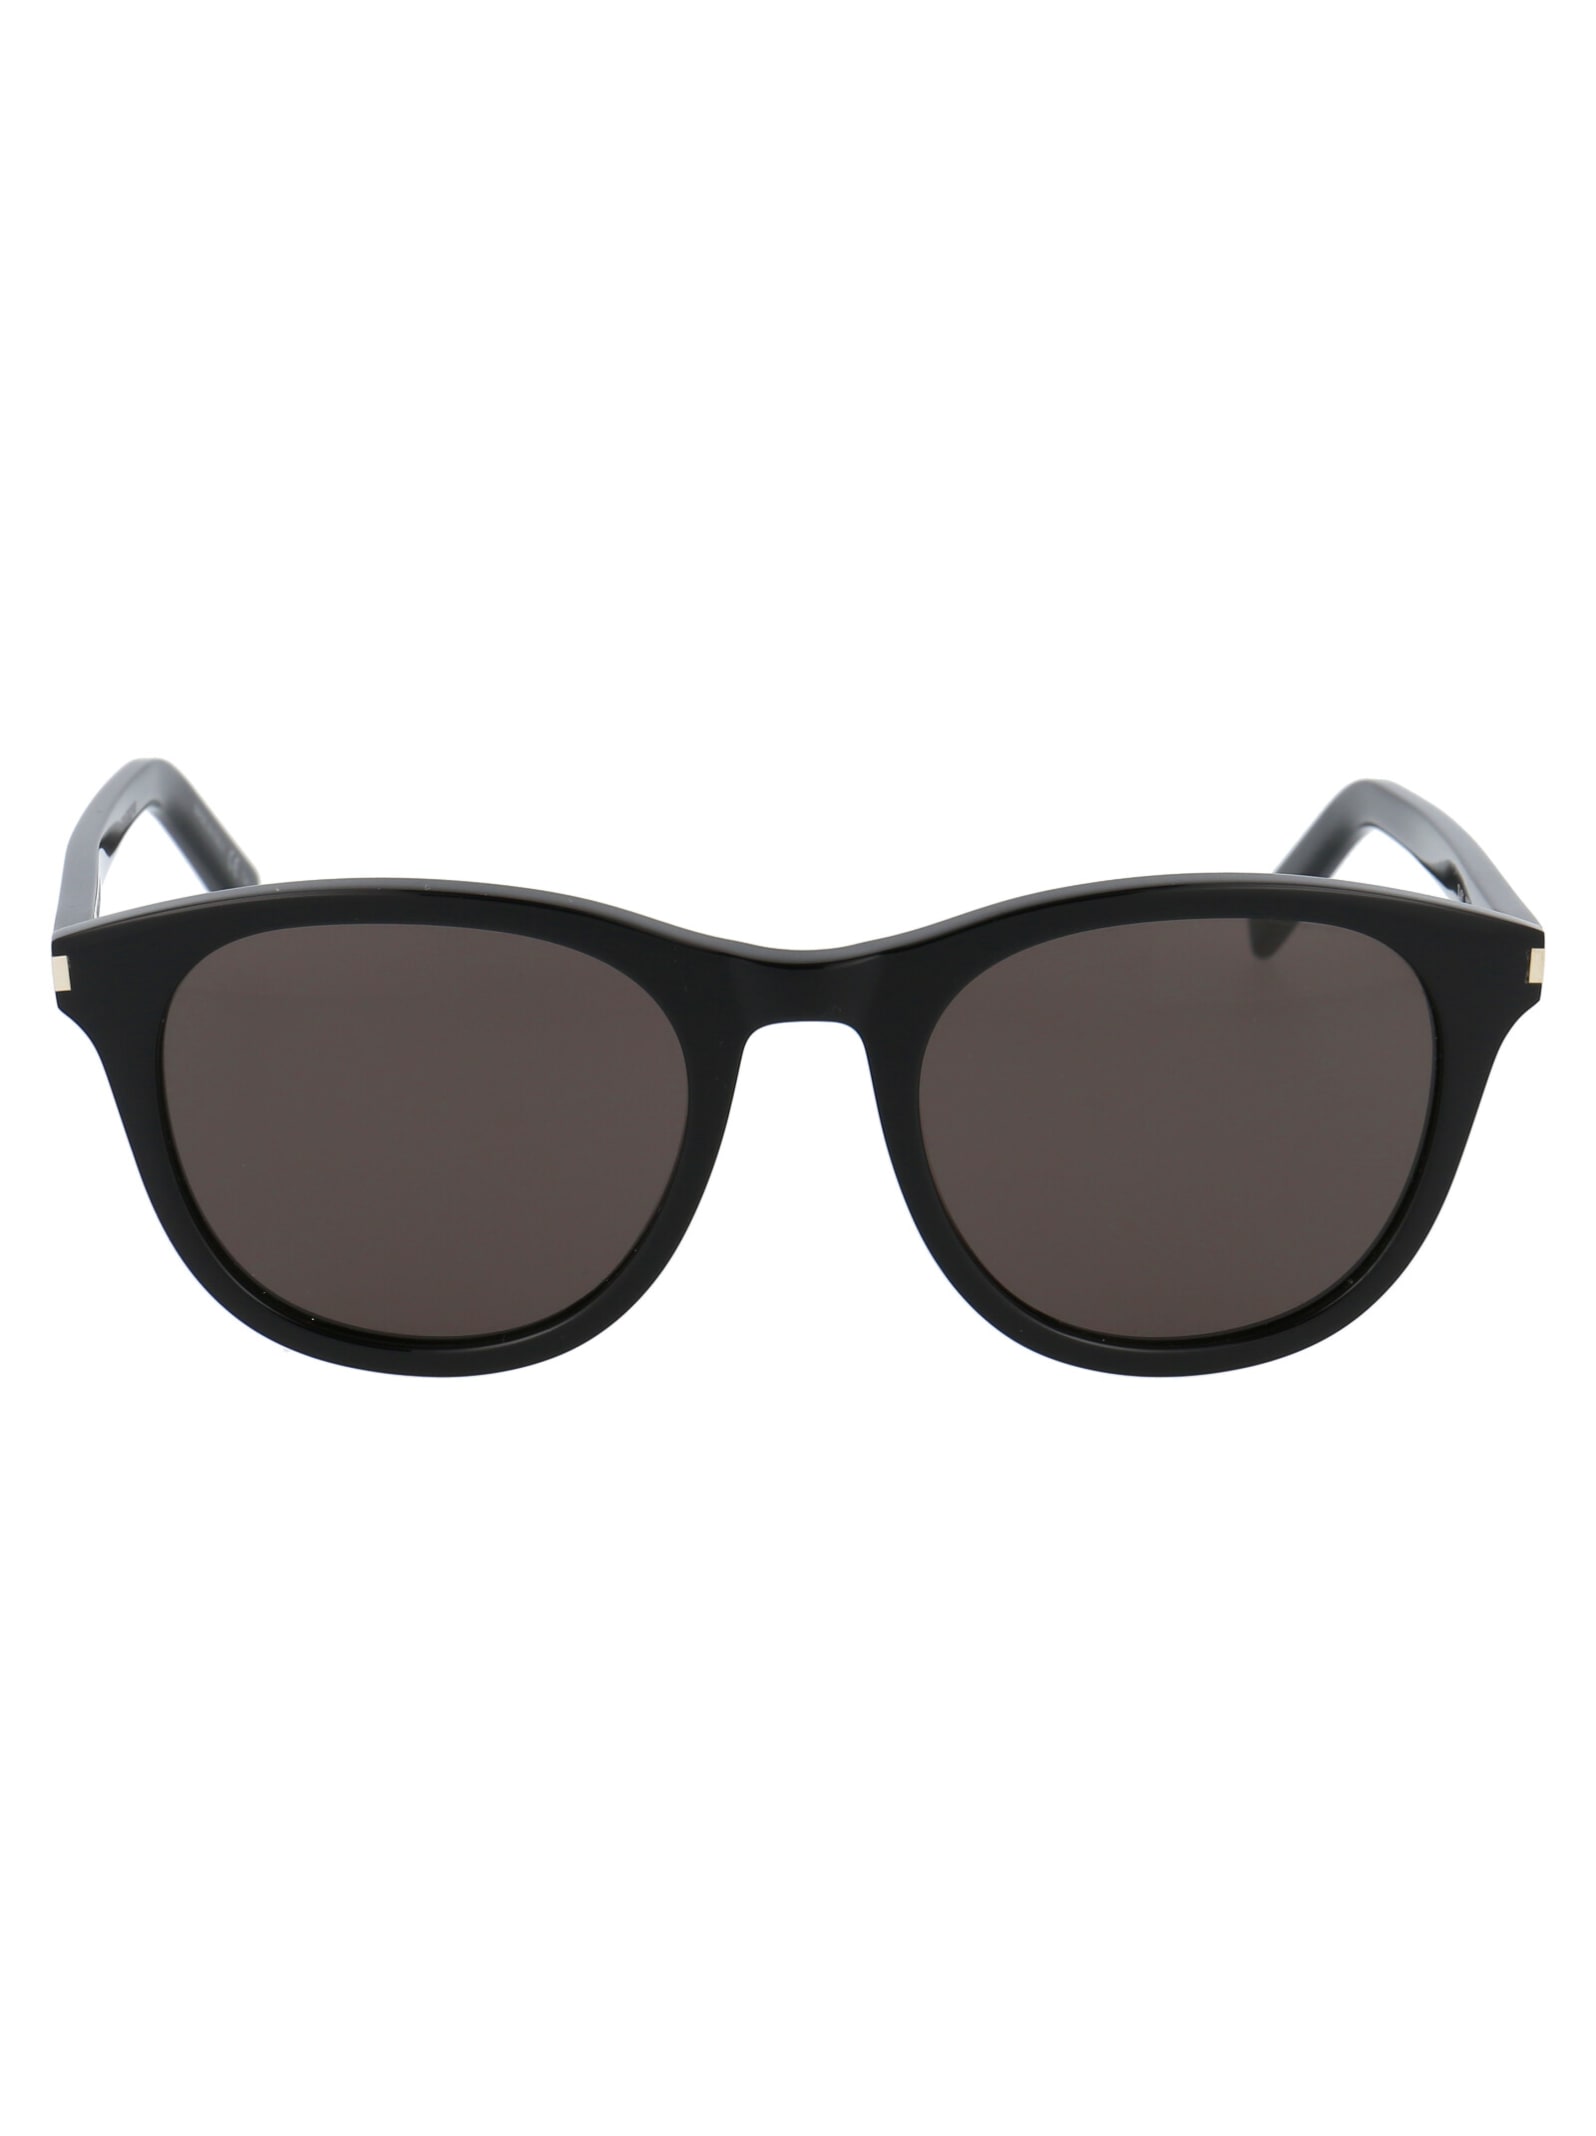 Saint Laurent Sl 401 Sunglasses In 005 Black Black Black